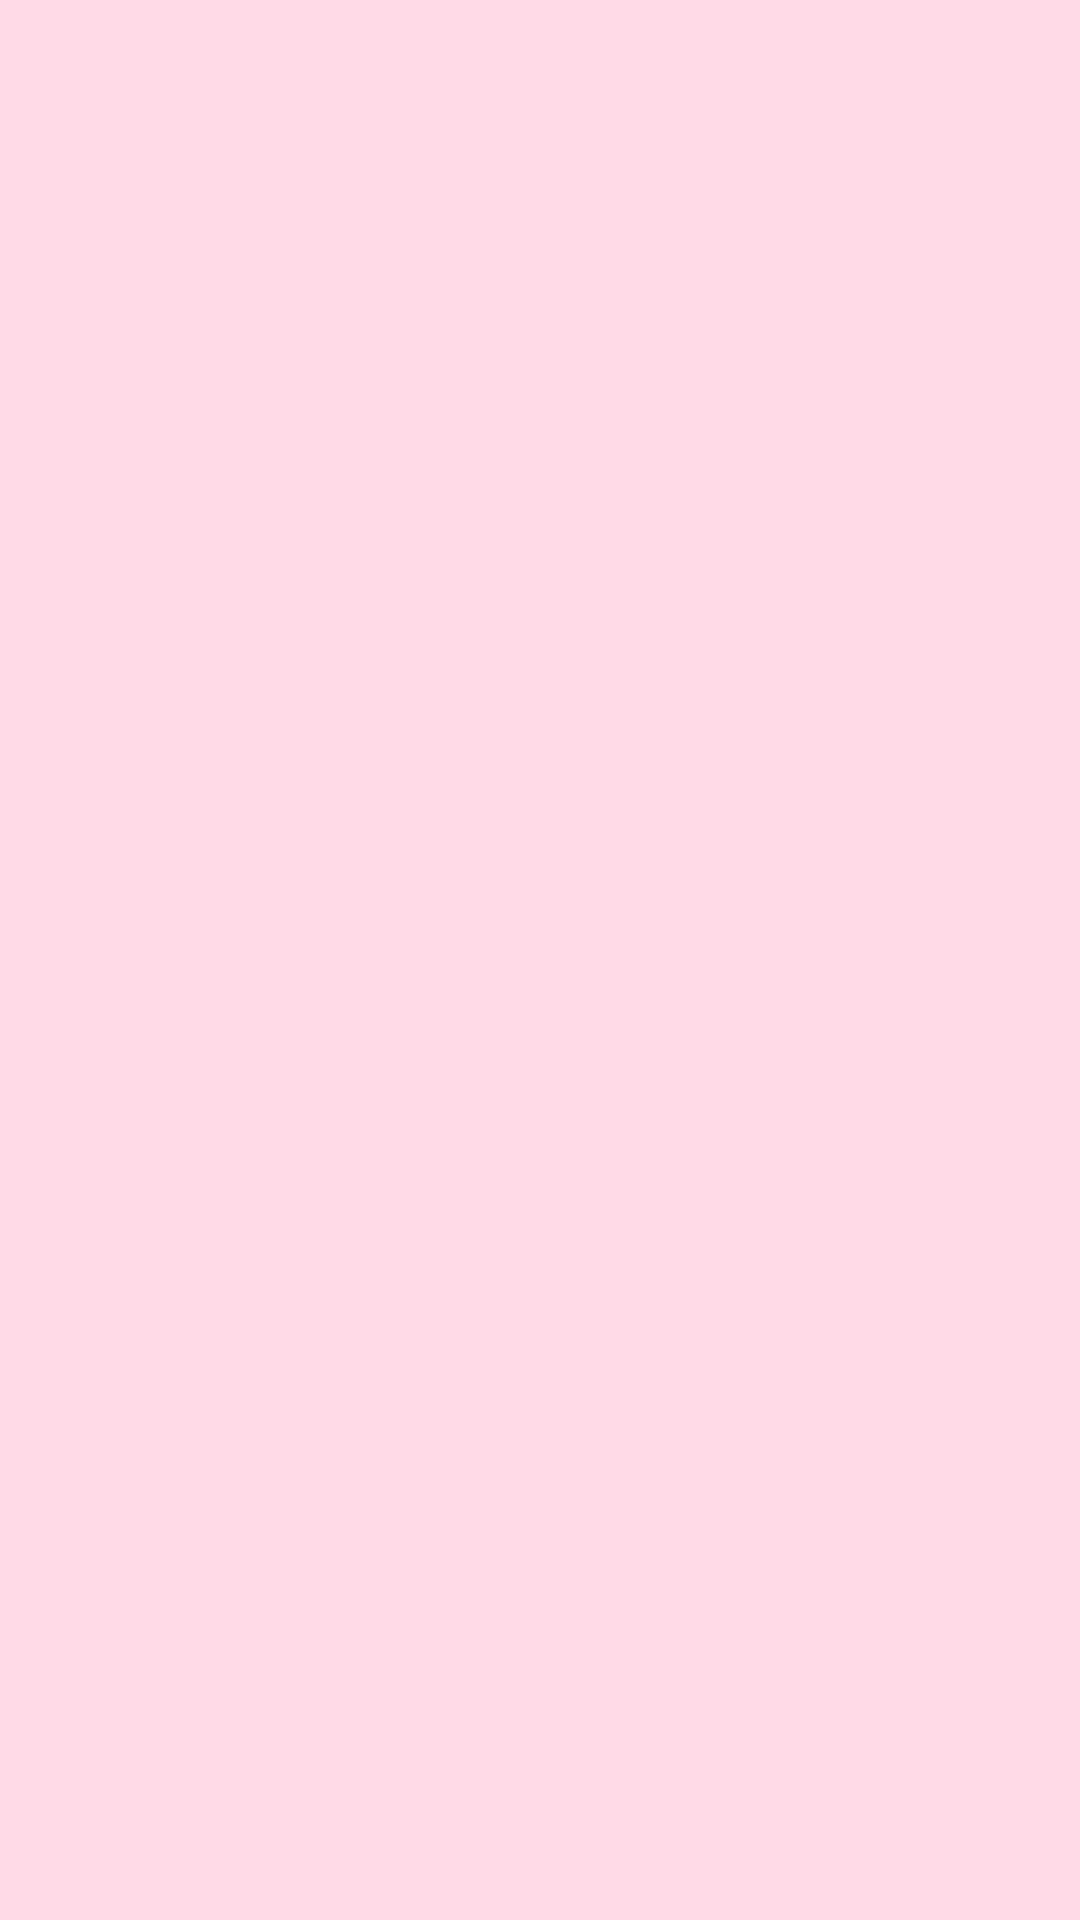 Cute Plain Pink Background